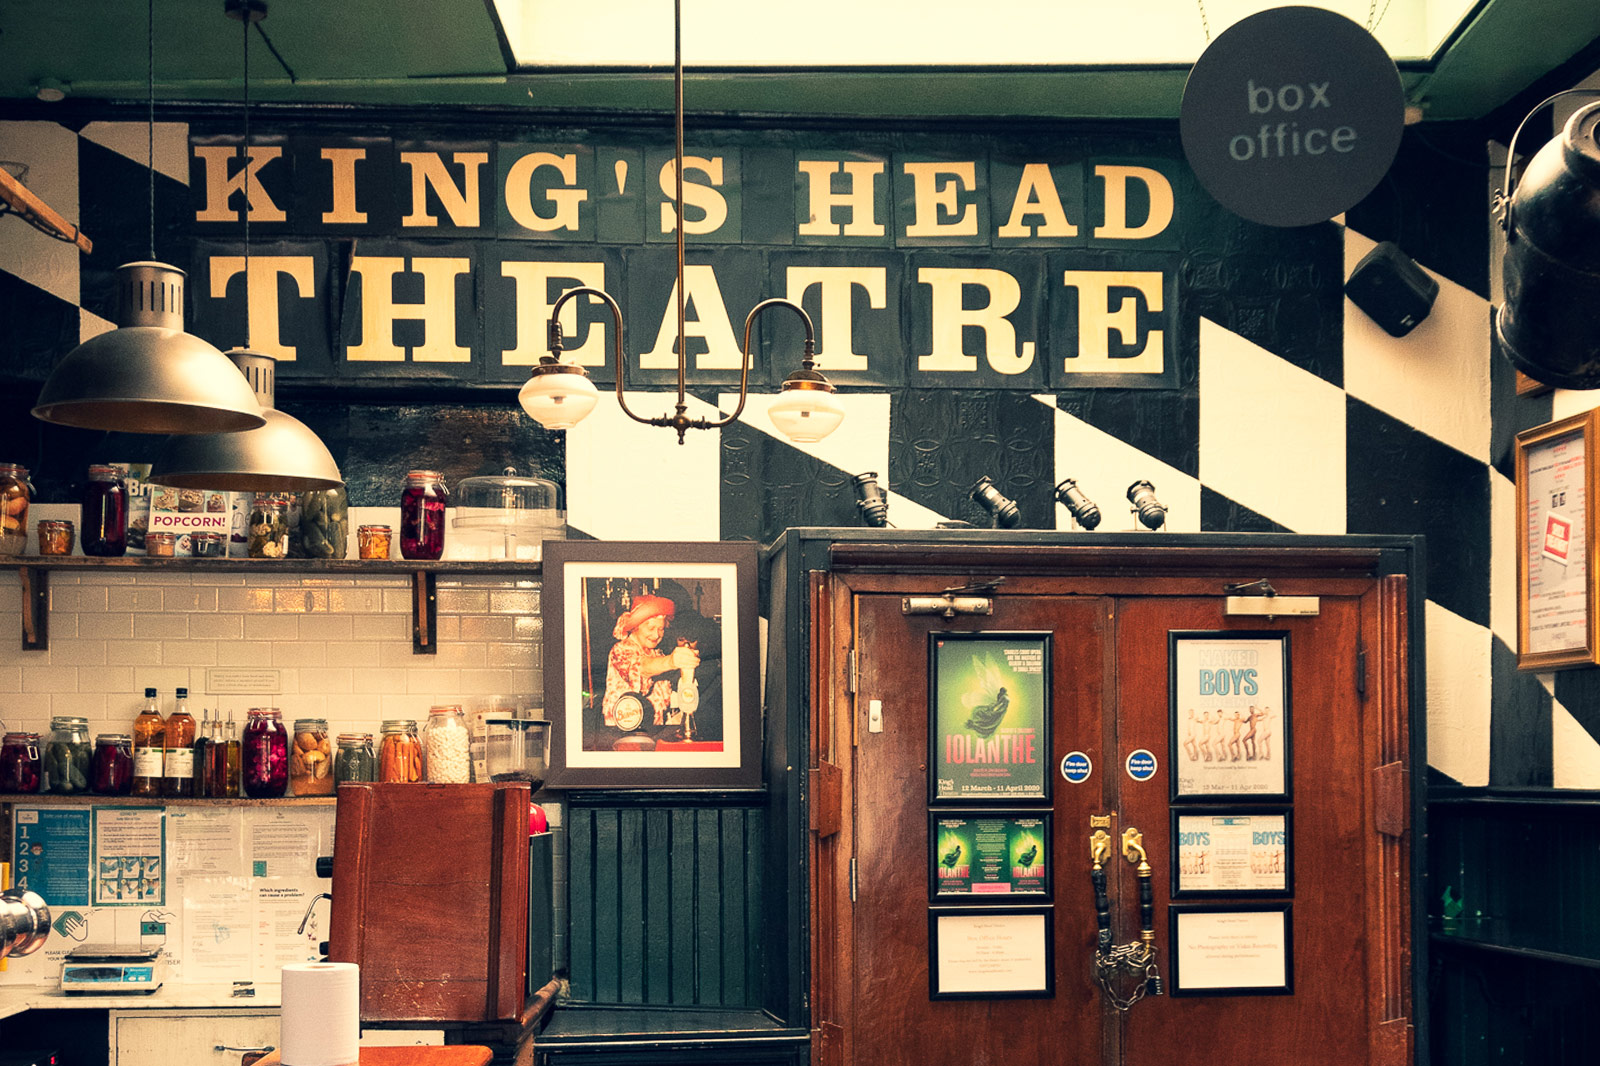 King's Head Islington Theatre Entrance